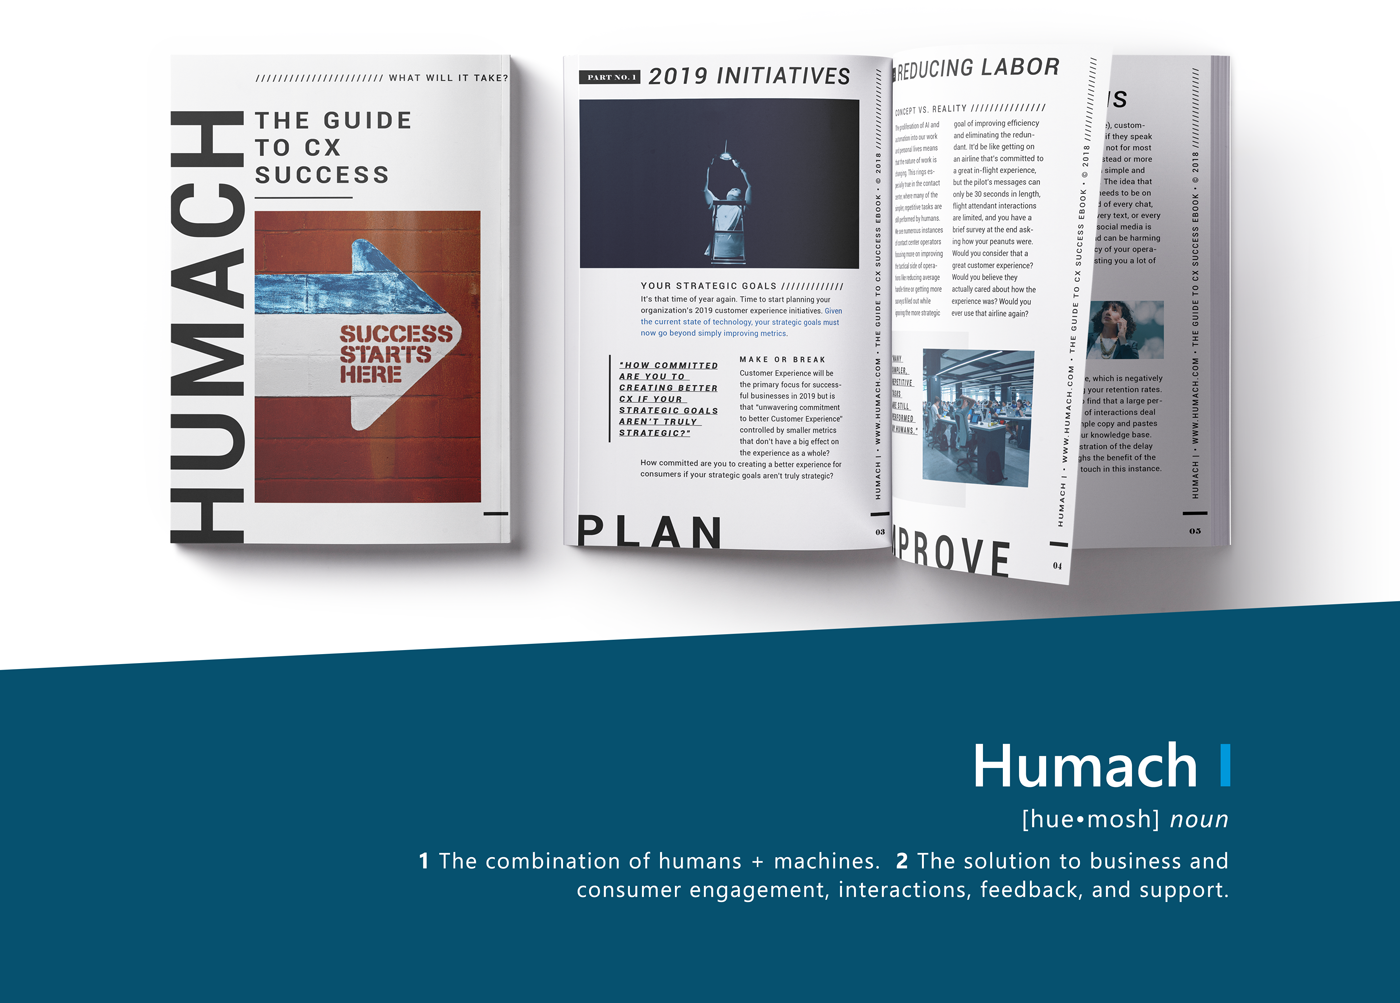 humach customer experience user experience ebook publication editorial eBook design innovation Brand awareness branding  ux Corporate Identity Communication Design information architecture 